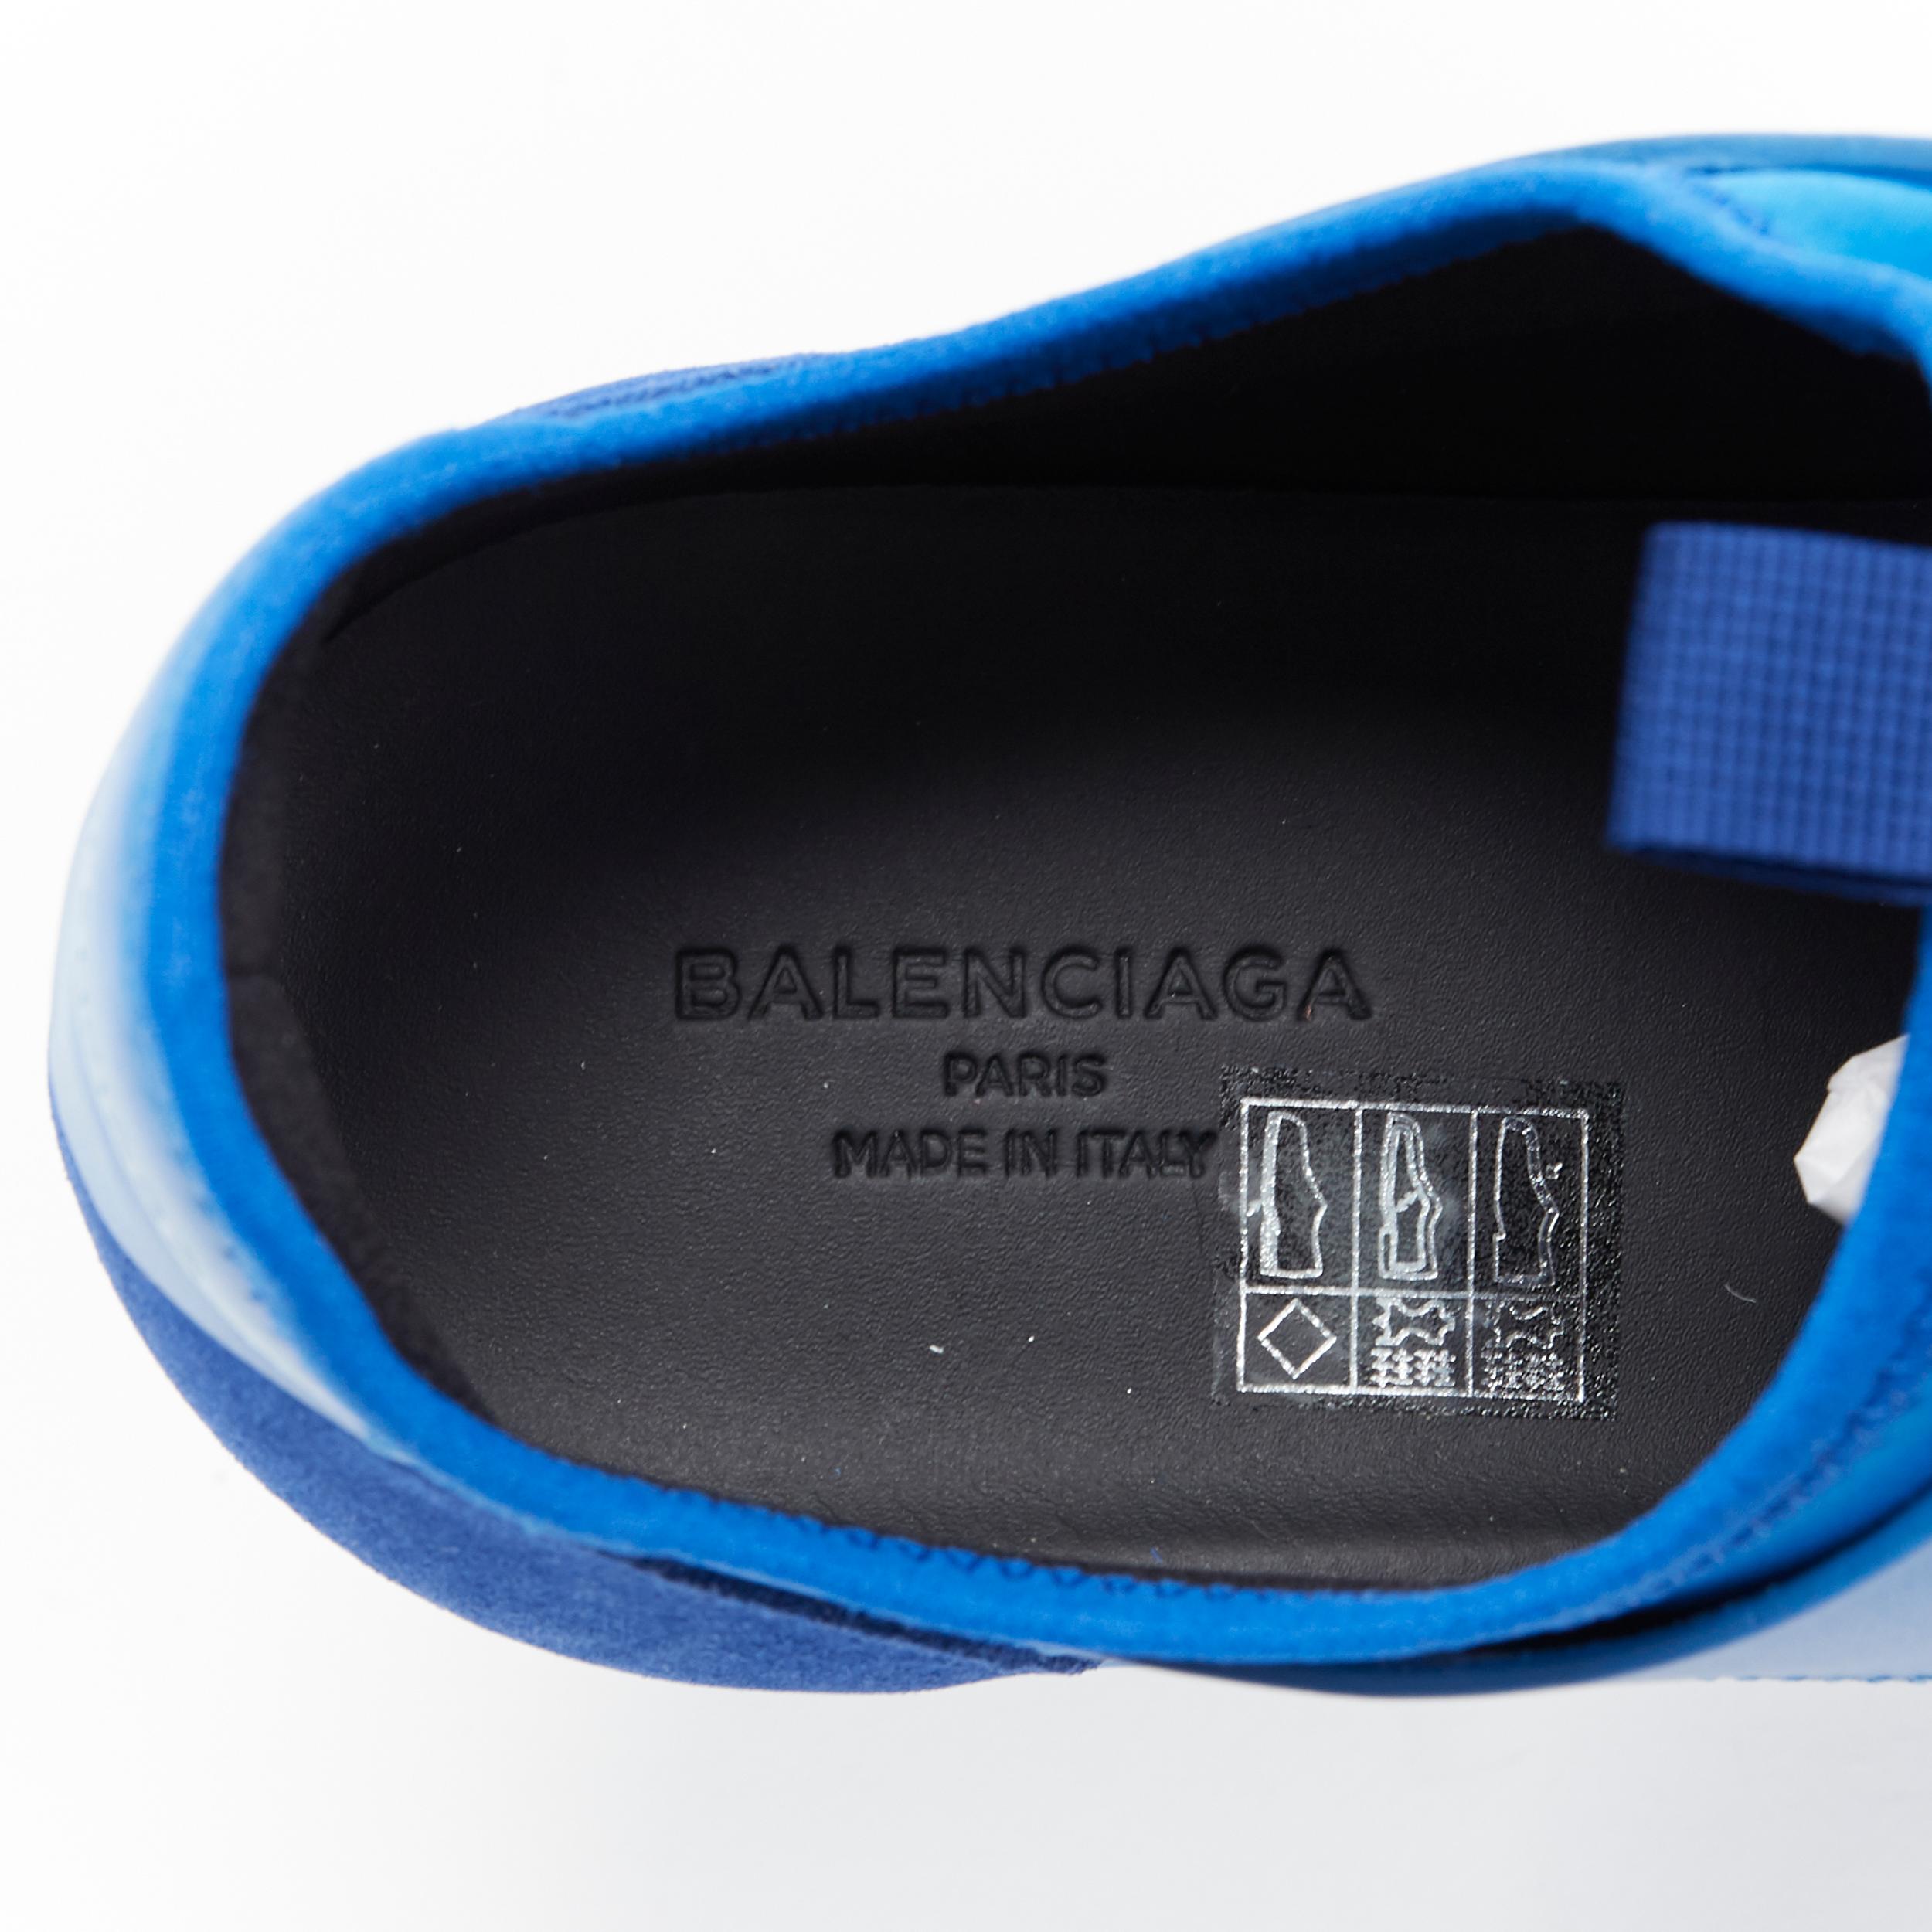 new BALENCIAGA Race Runner cobalt blue low sneakers EU43 US10 506328 W0YXS 4307 3